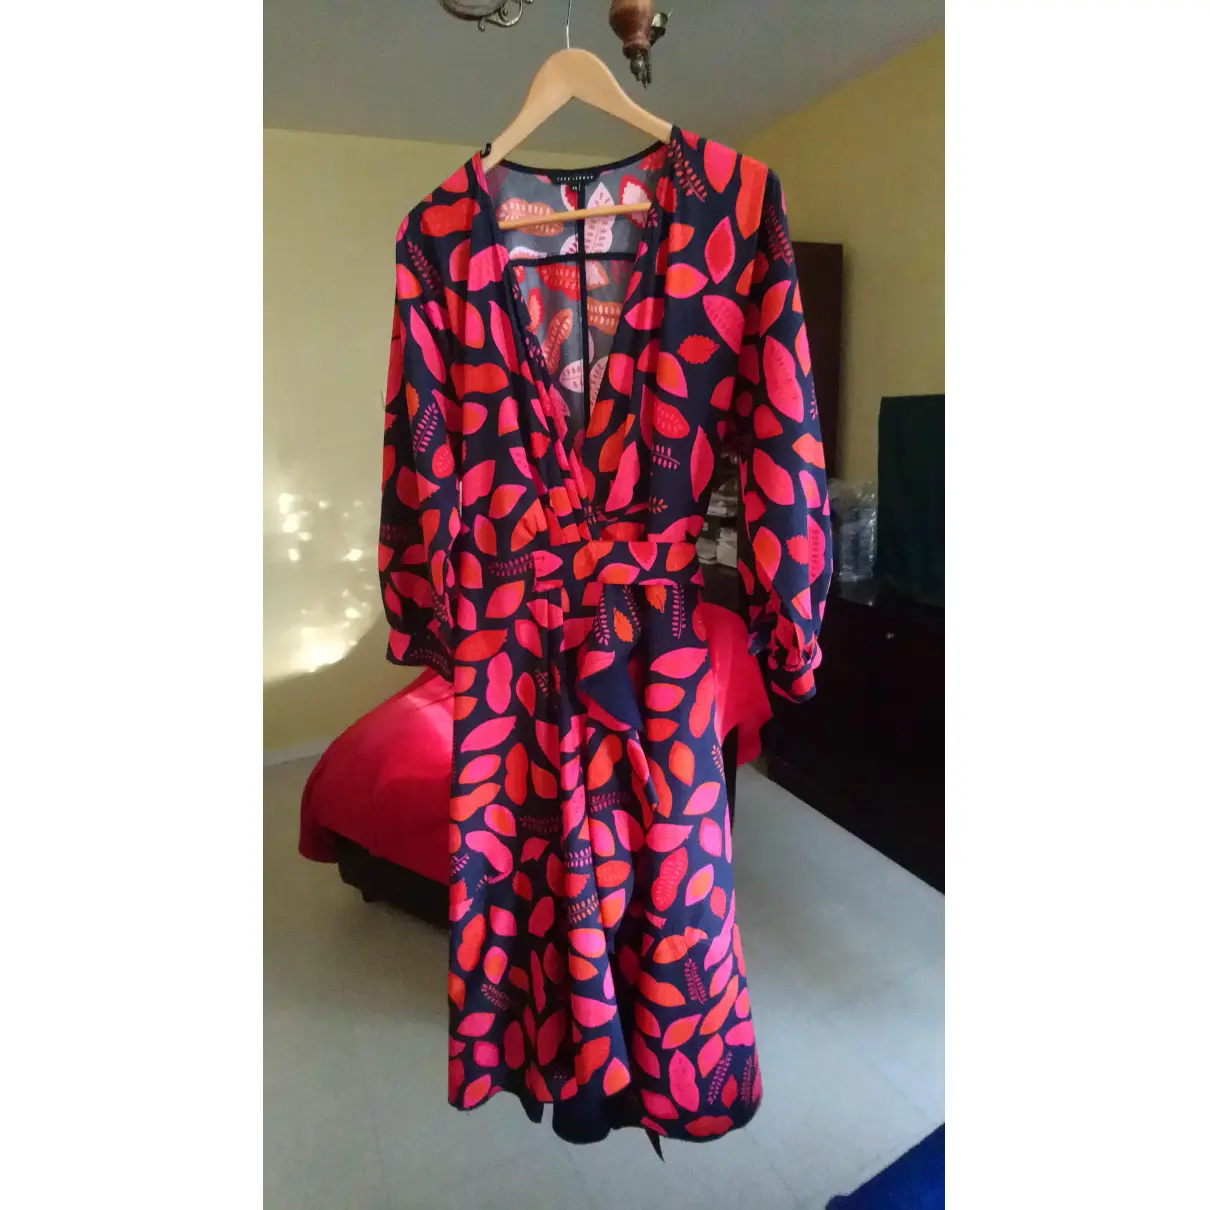 Buy Tara Jarmon Maxi dress online